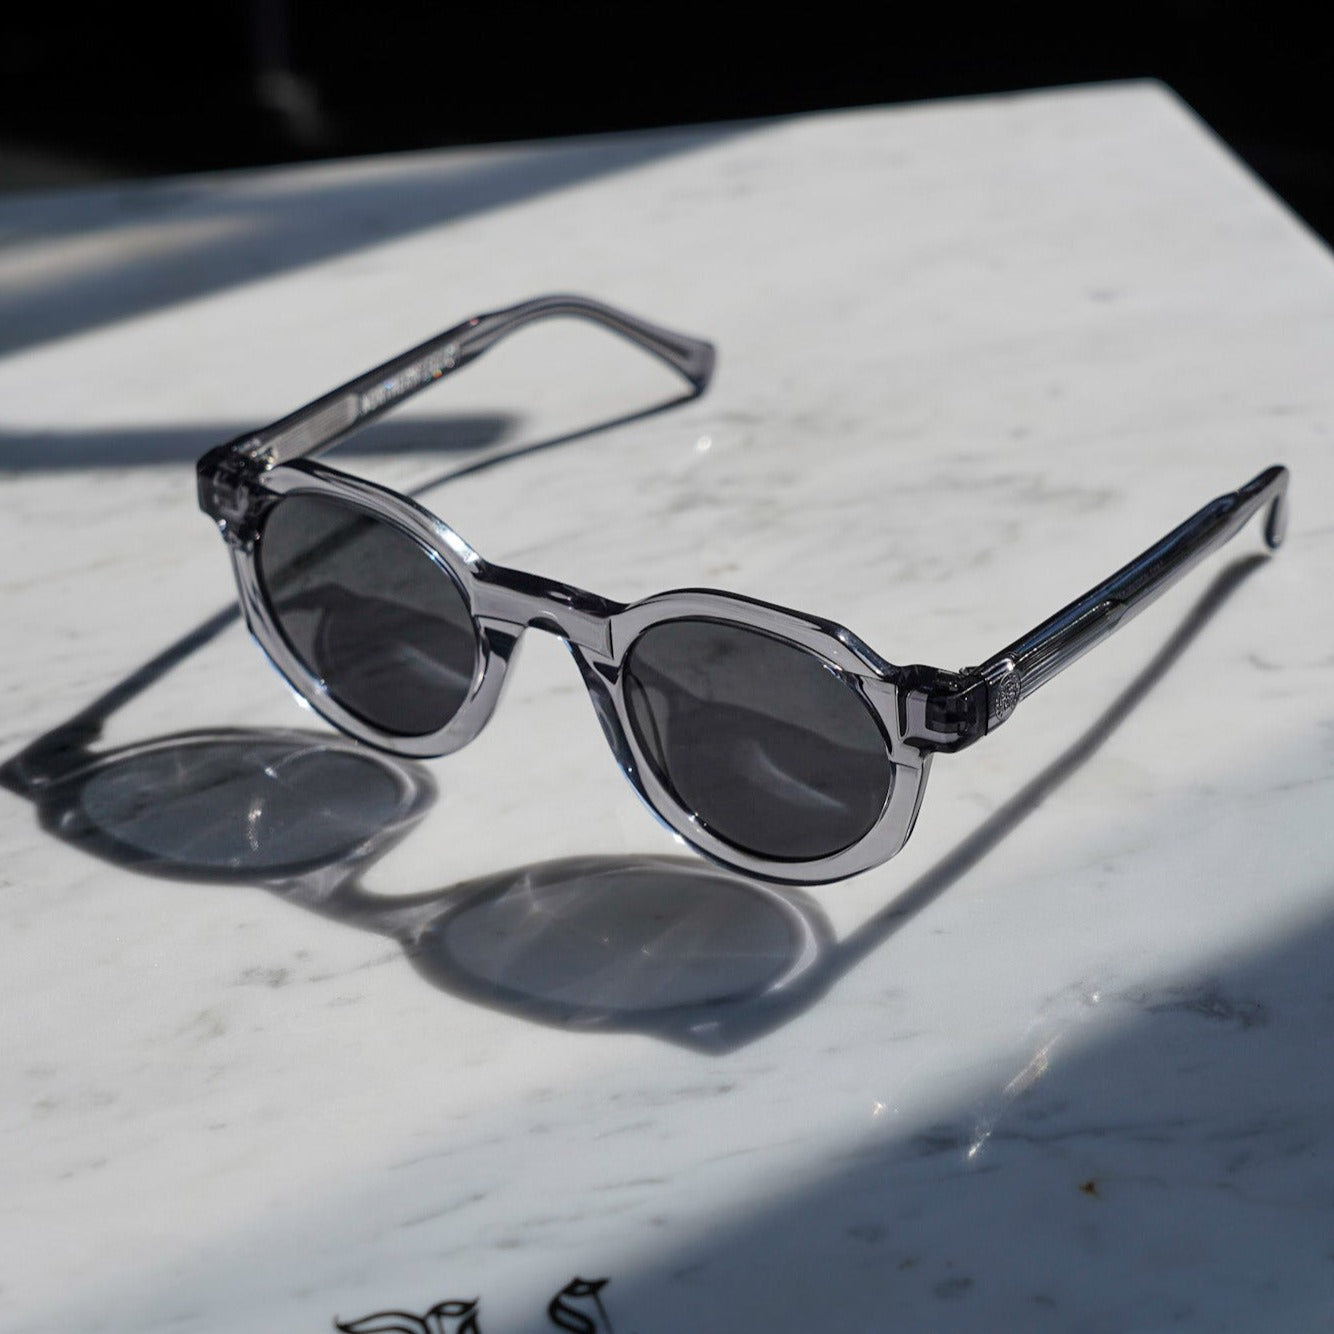 Signatursolglasögon - Transparent grey